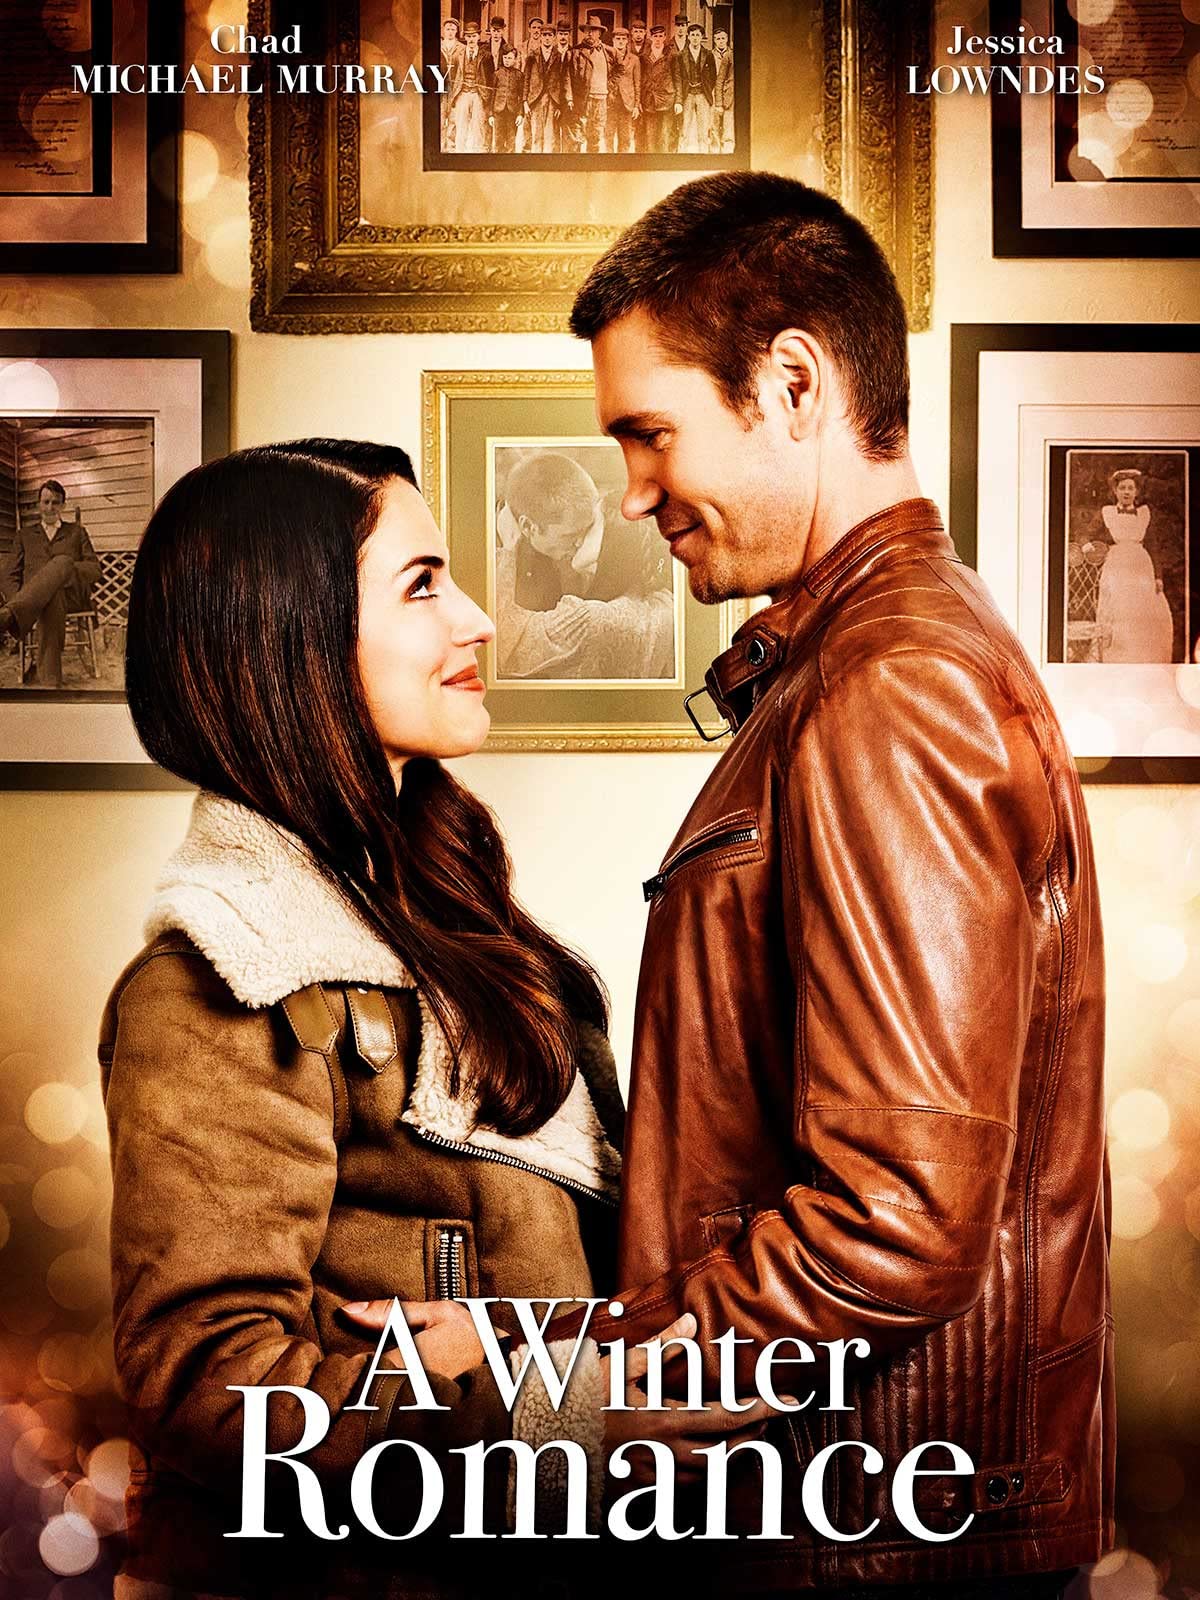 A Winter Romance now on Amazon Prime Video! - Tule Publishing Group |